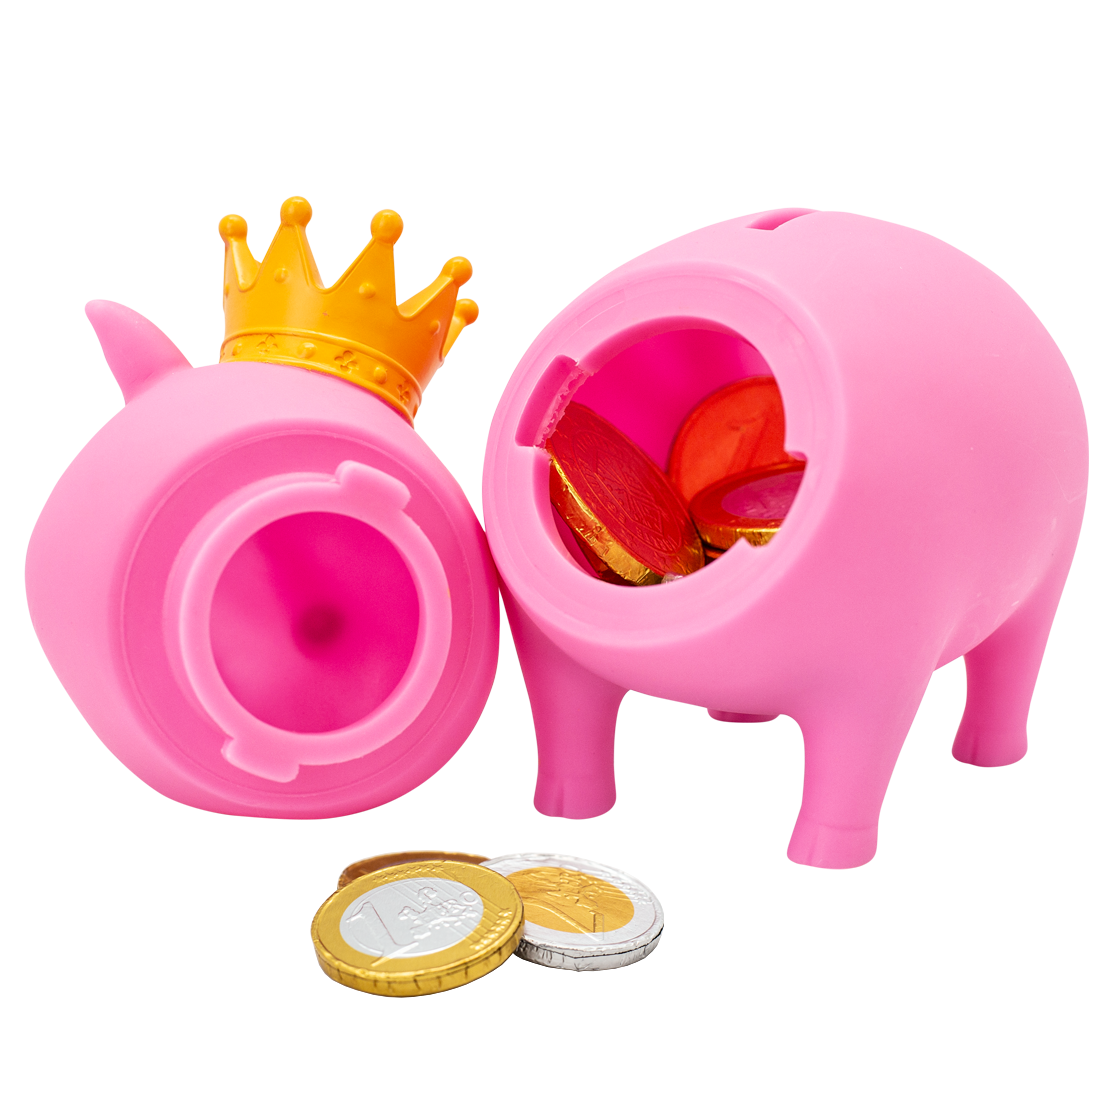 Corona rosa de cerdo